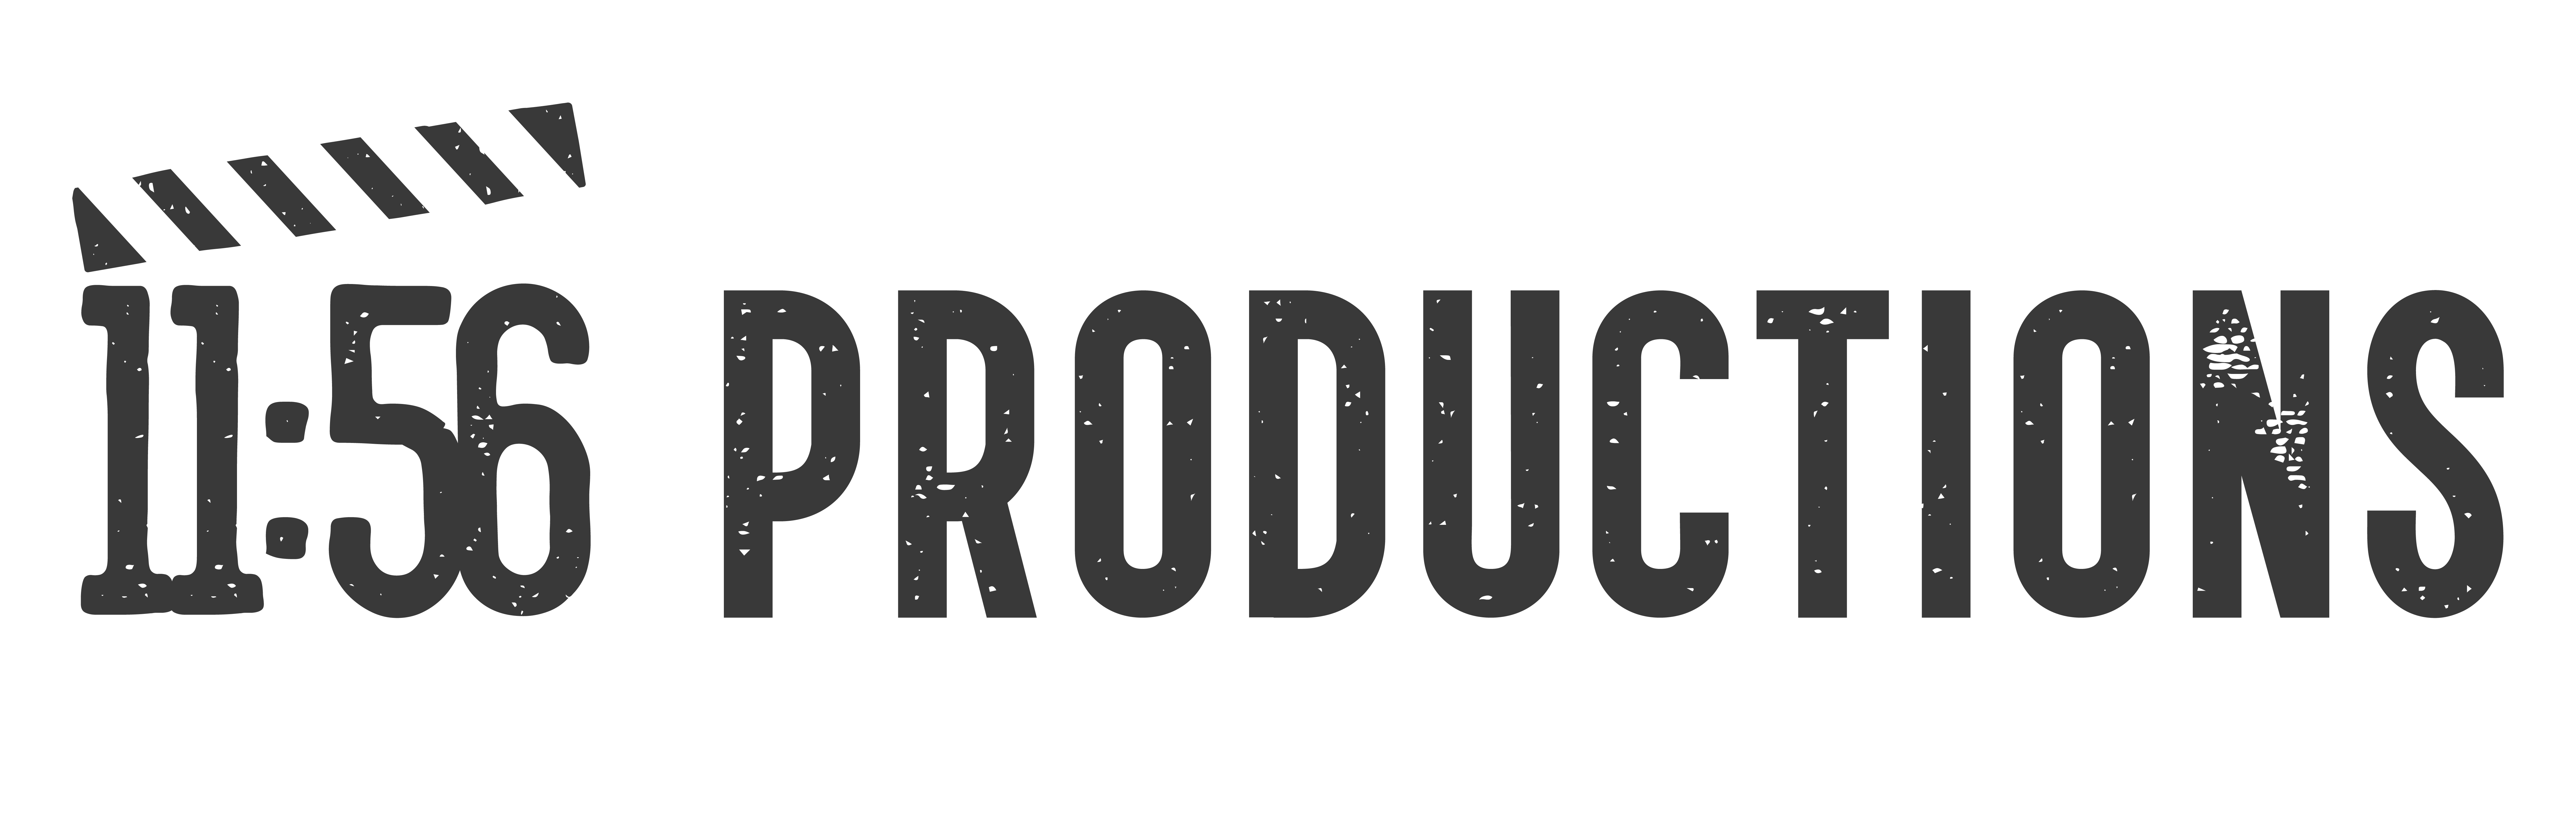 11:56 Productions logo design